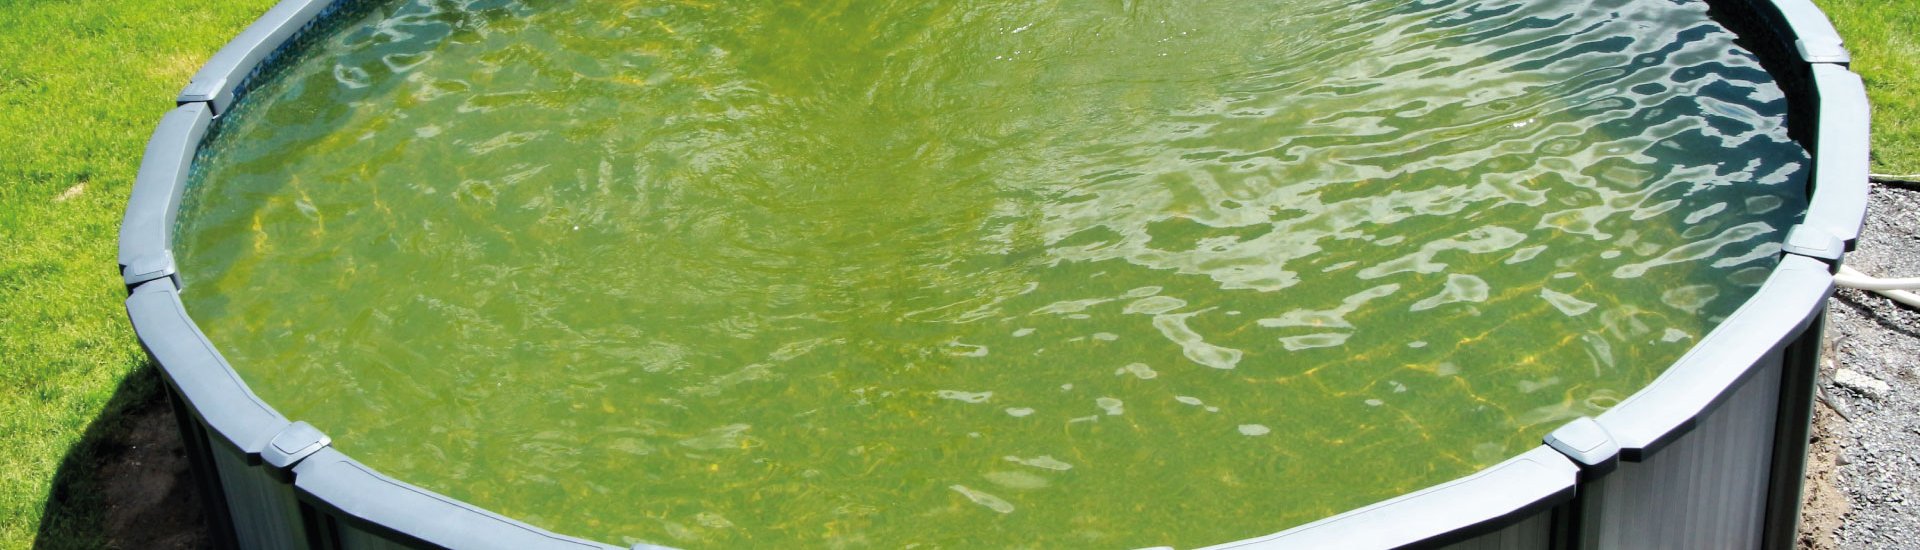 Eau verte dans une piscine hors-sol